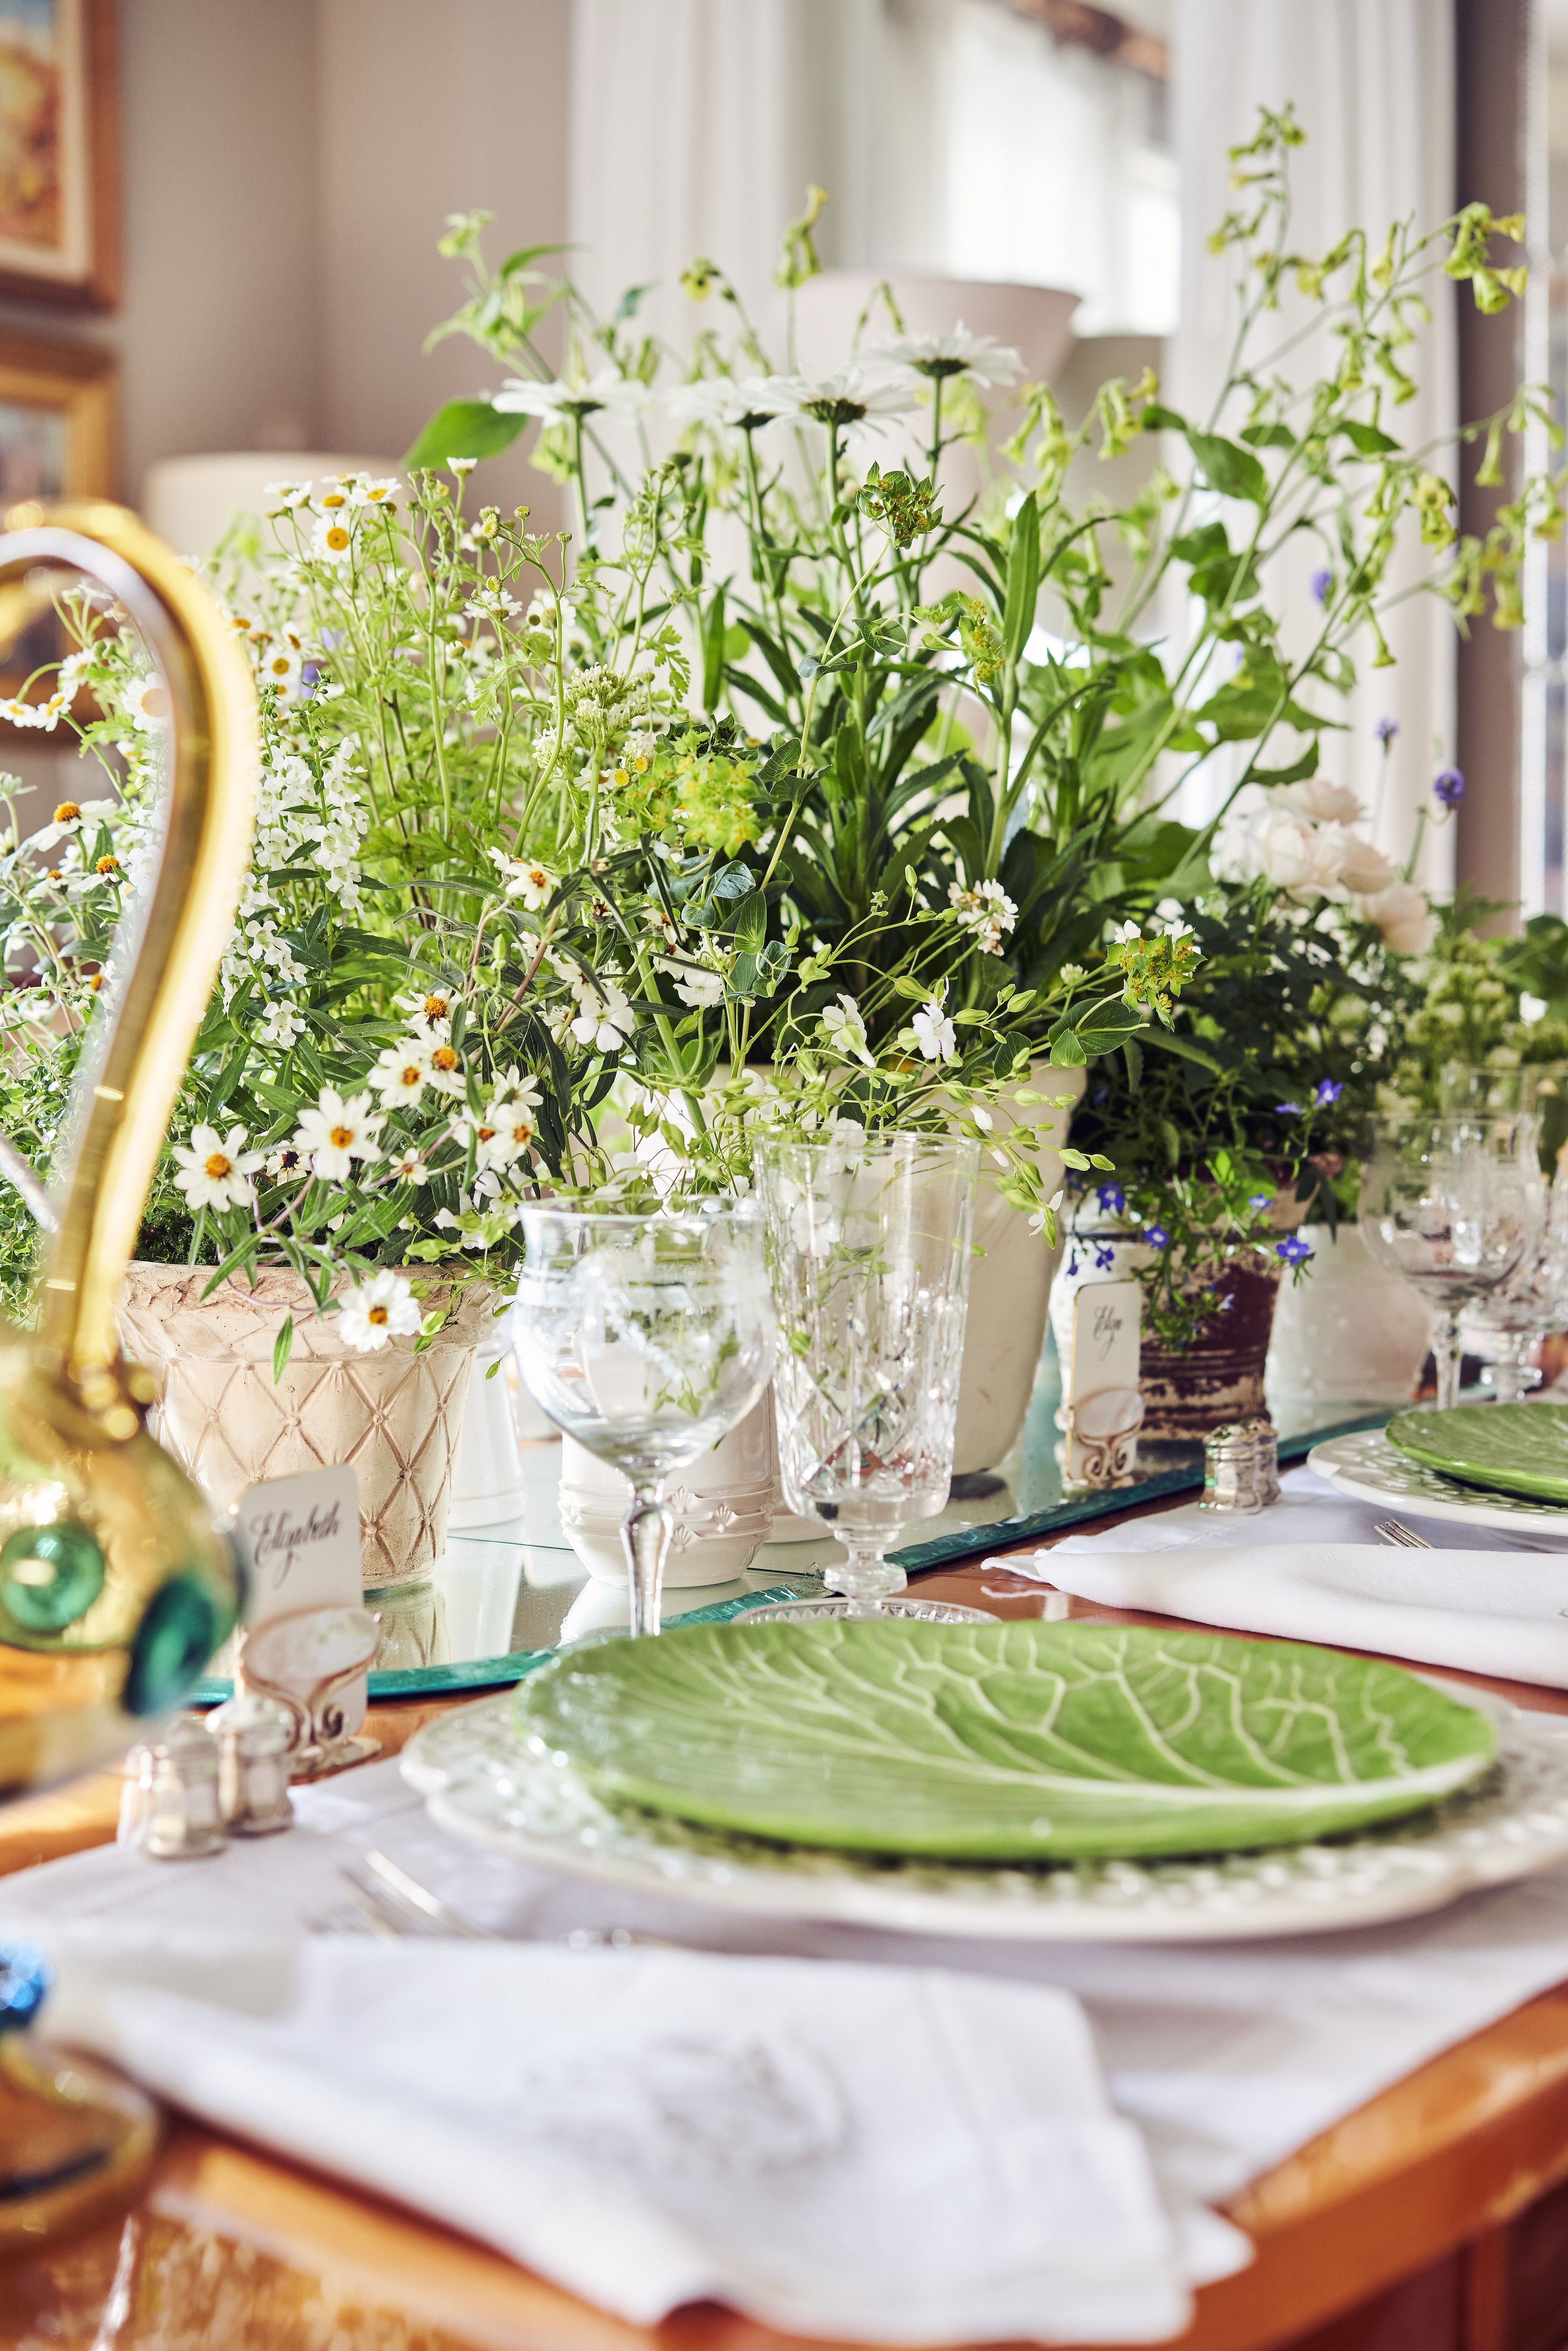 Gardenia Flower Print Tablecloth Decorative Elegant Table Cloth Linen Cover